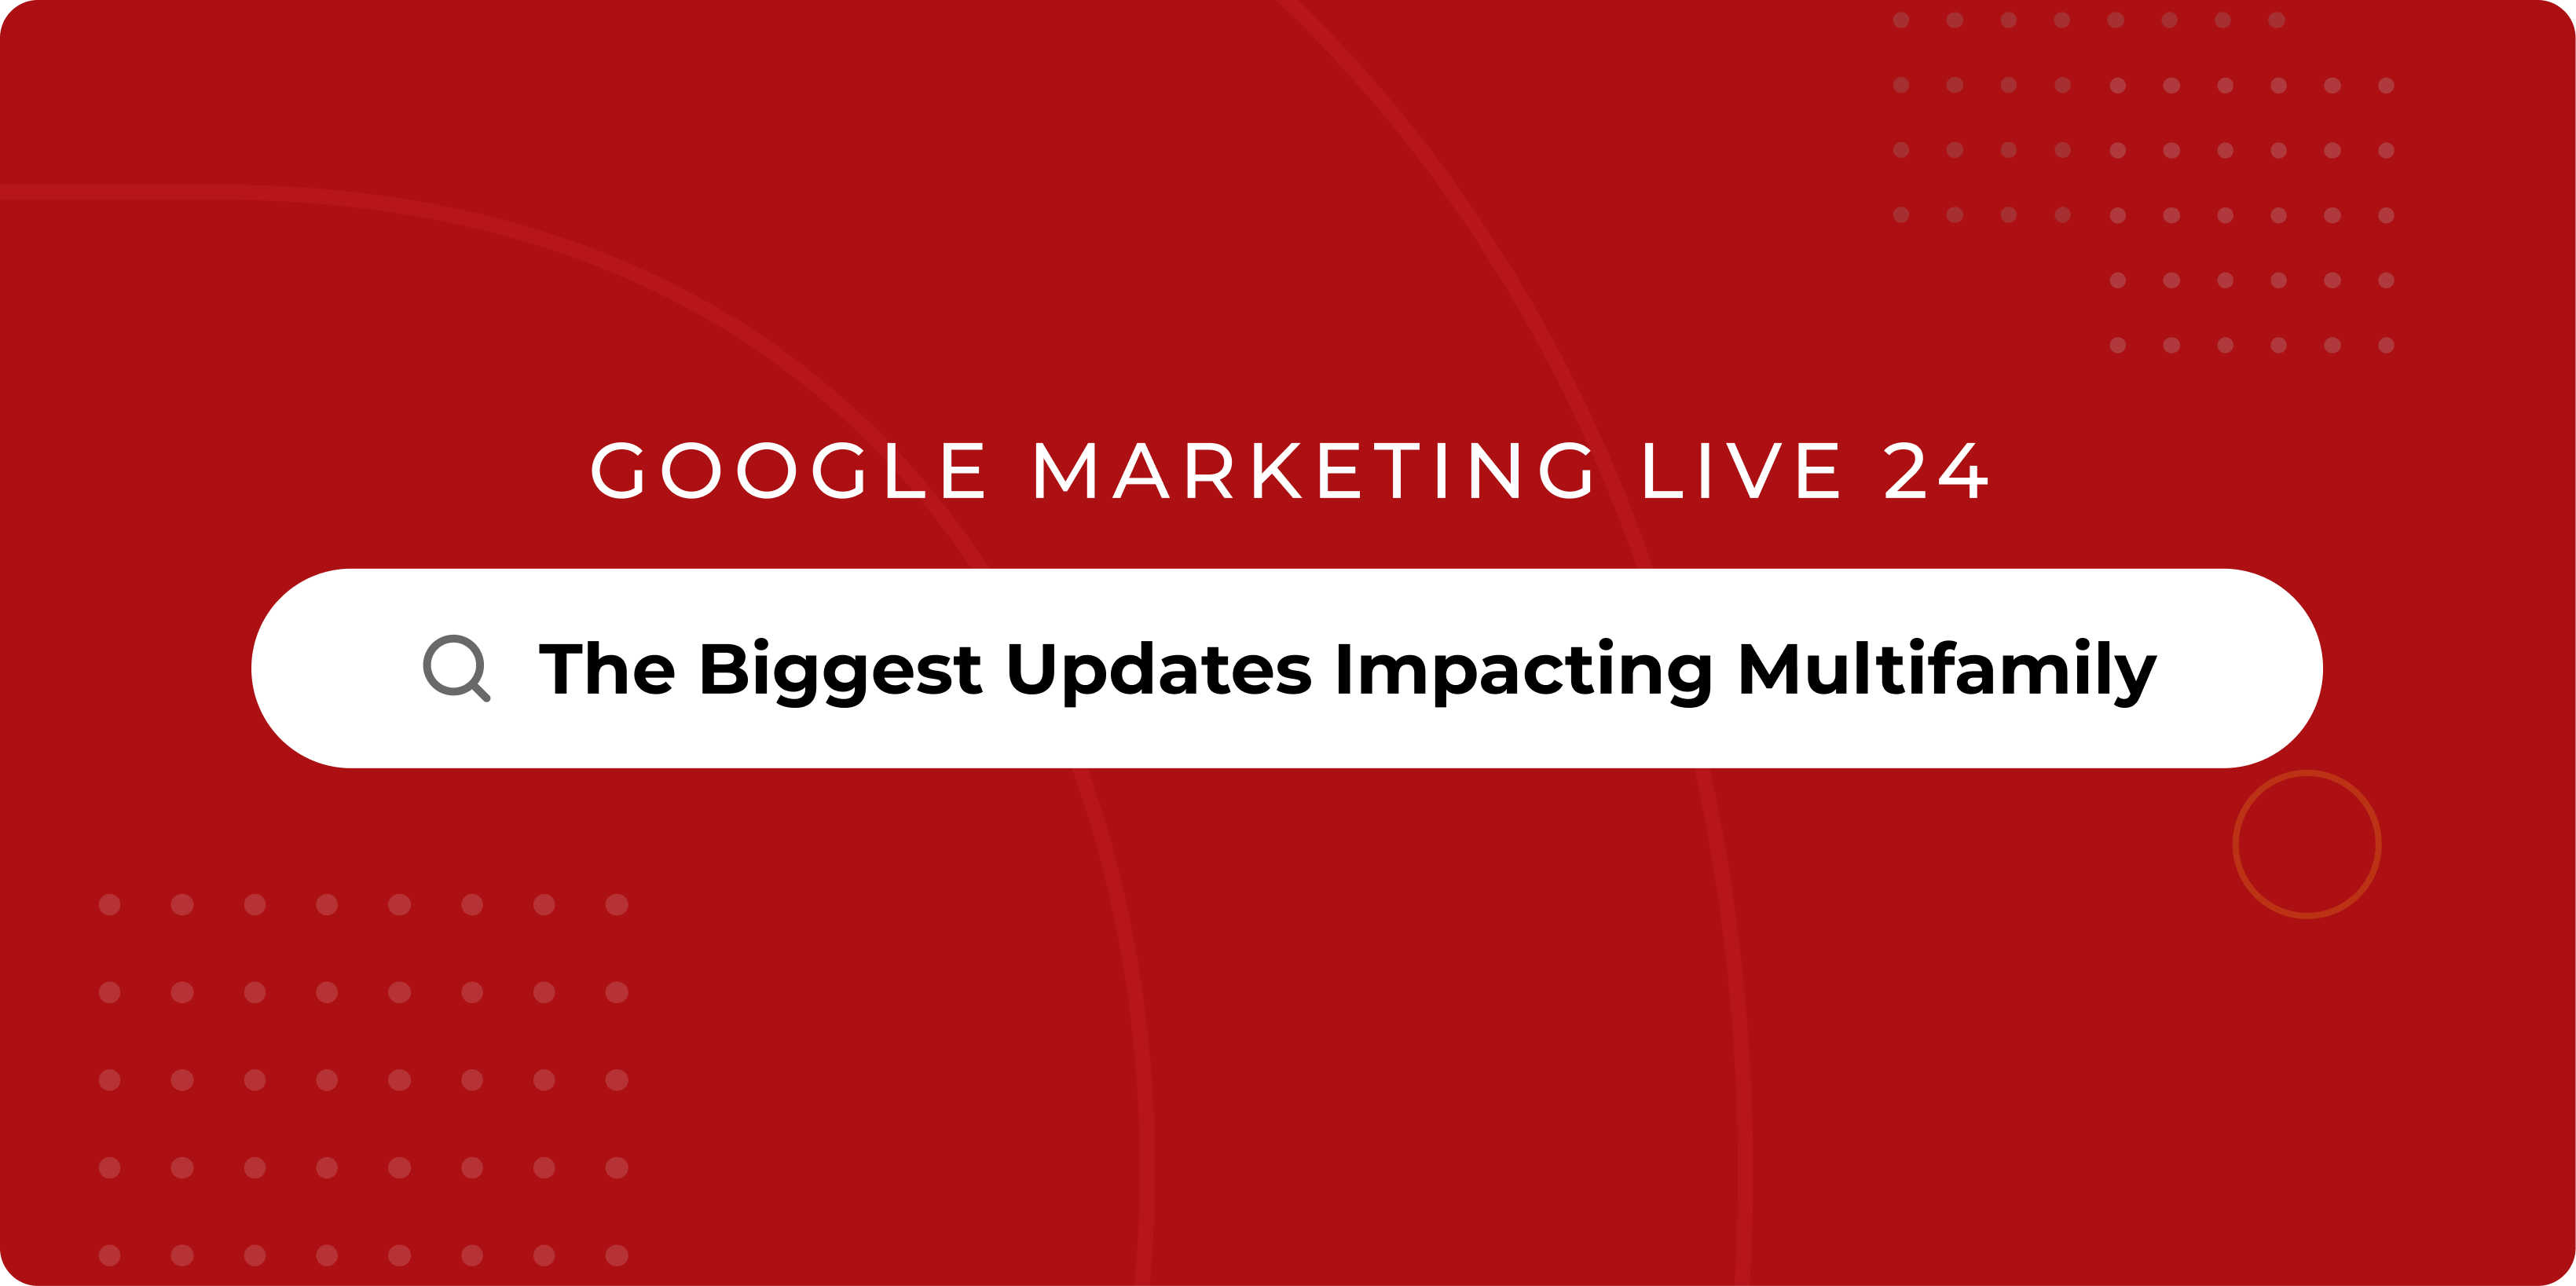 Google Marketing Live 24 - The Biggest Updates Impacting Multifamily